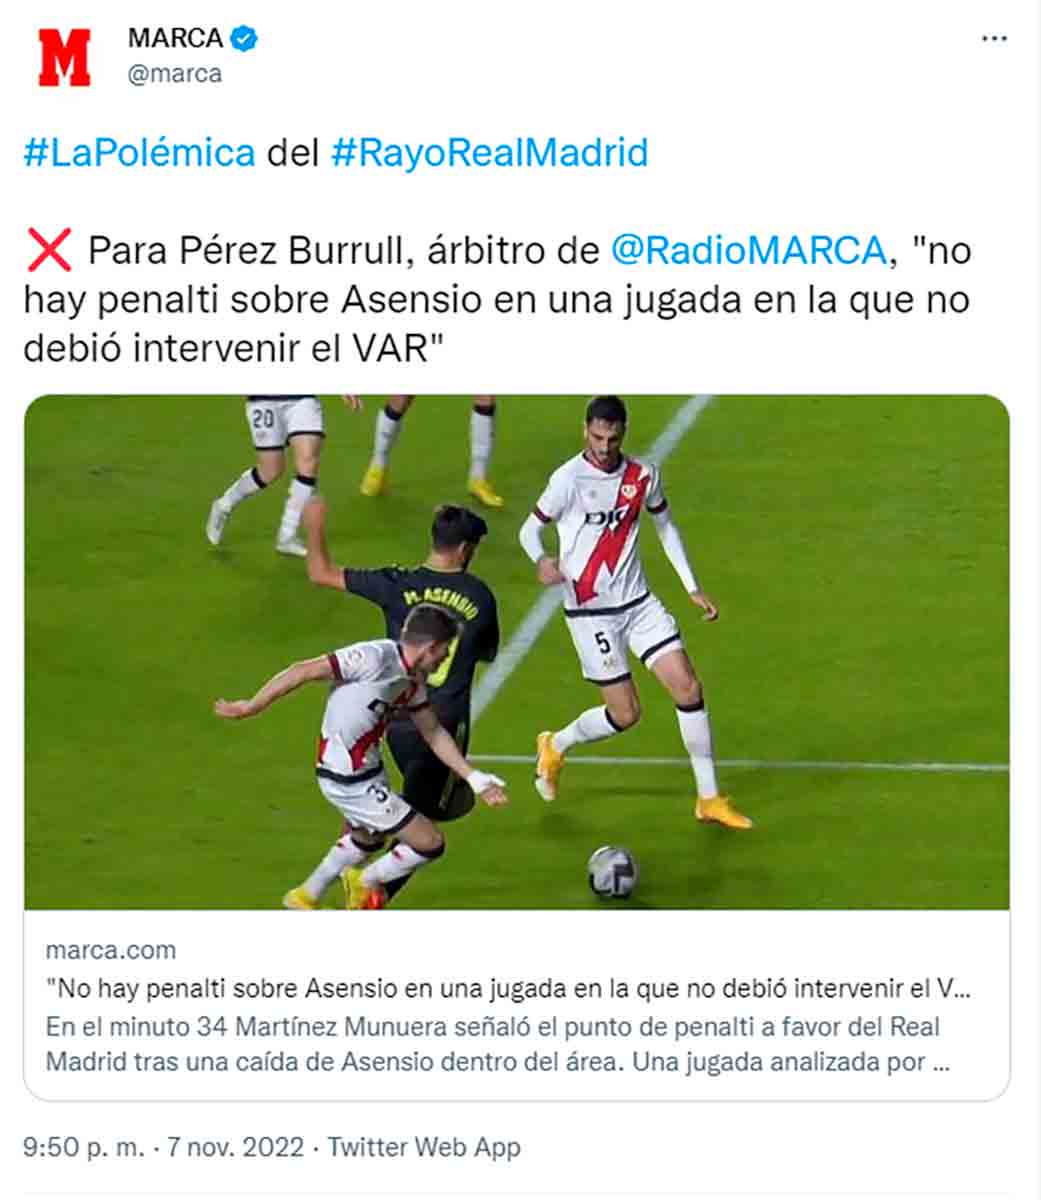 Pérez Burrul penalti Asensio Rayo.